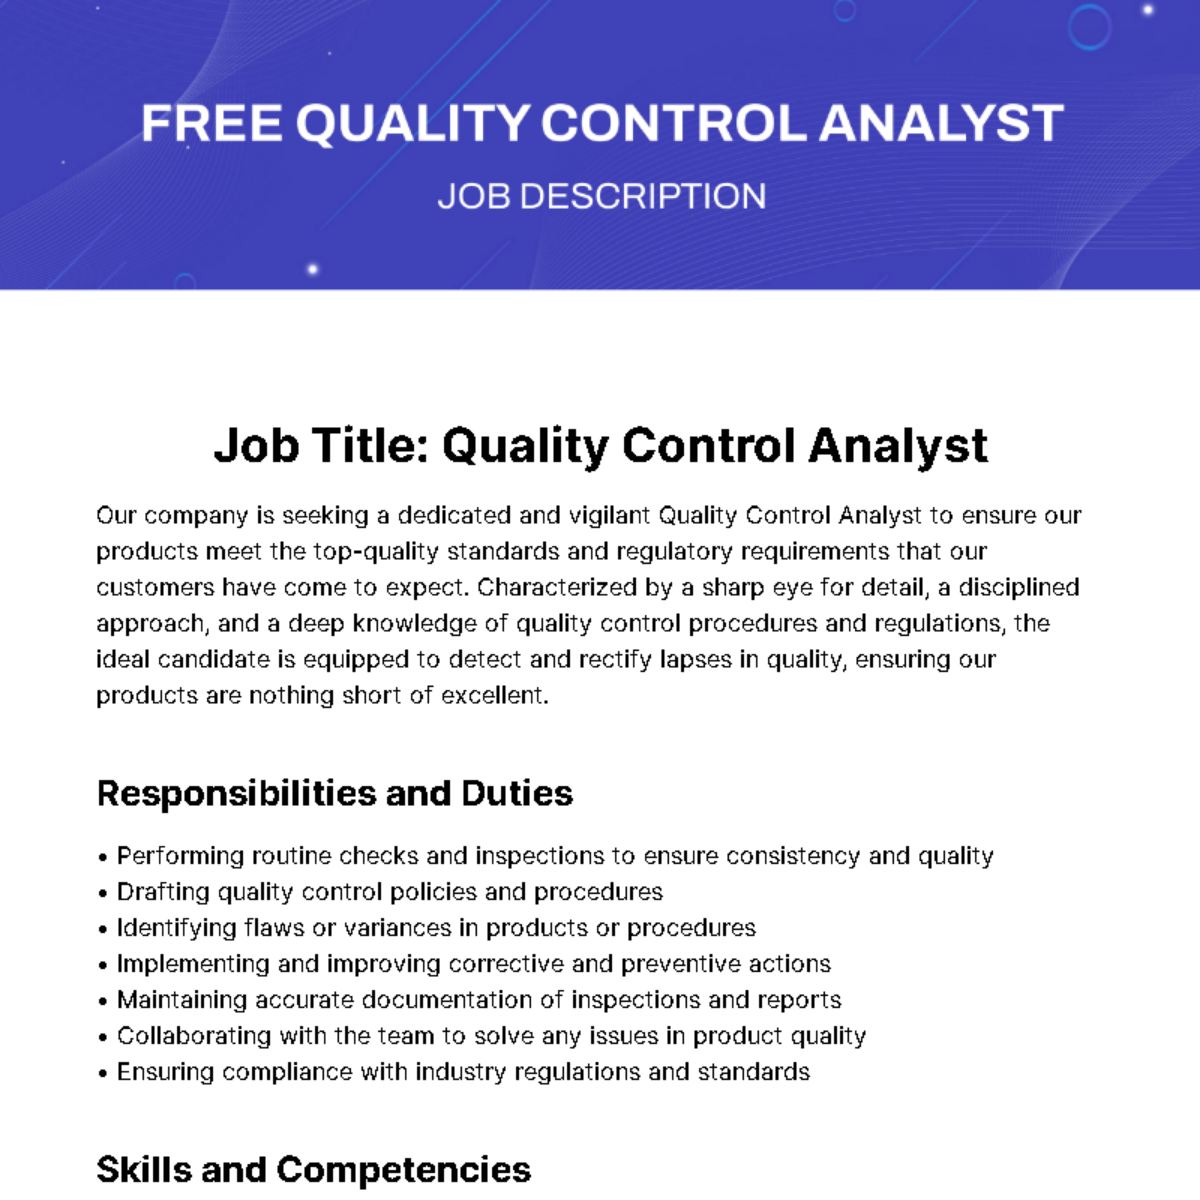 Quality Control Analyst Job Description Template